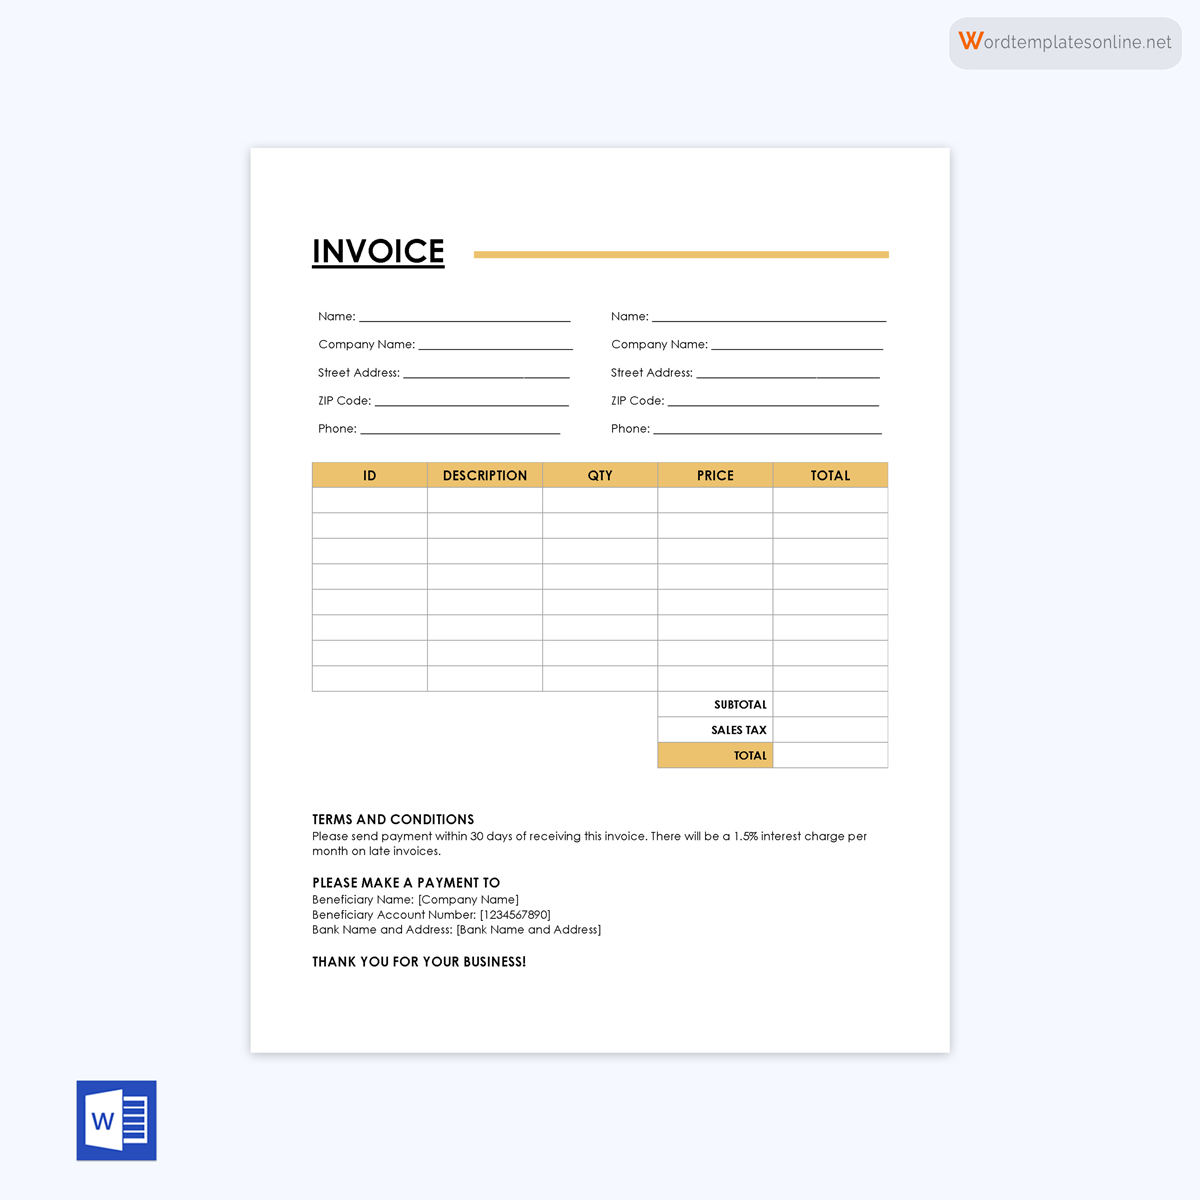  download
free invoice template pdf
free invoice generator